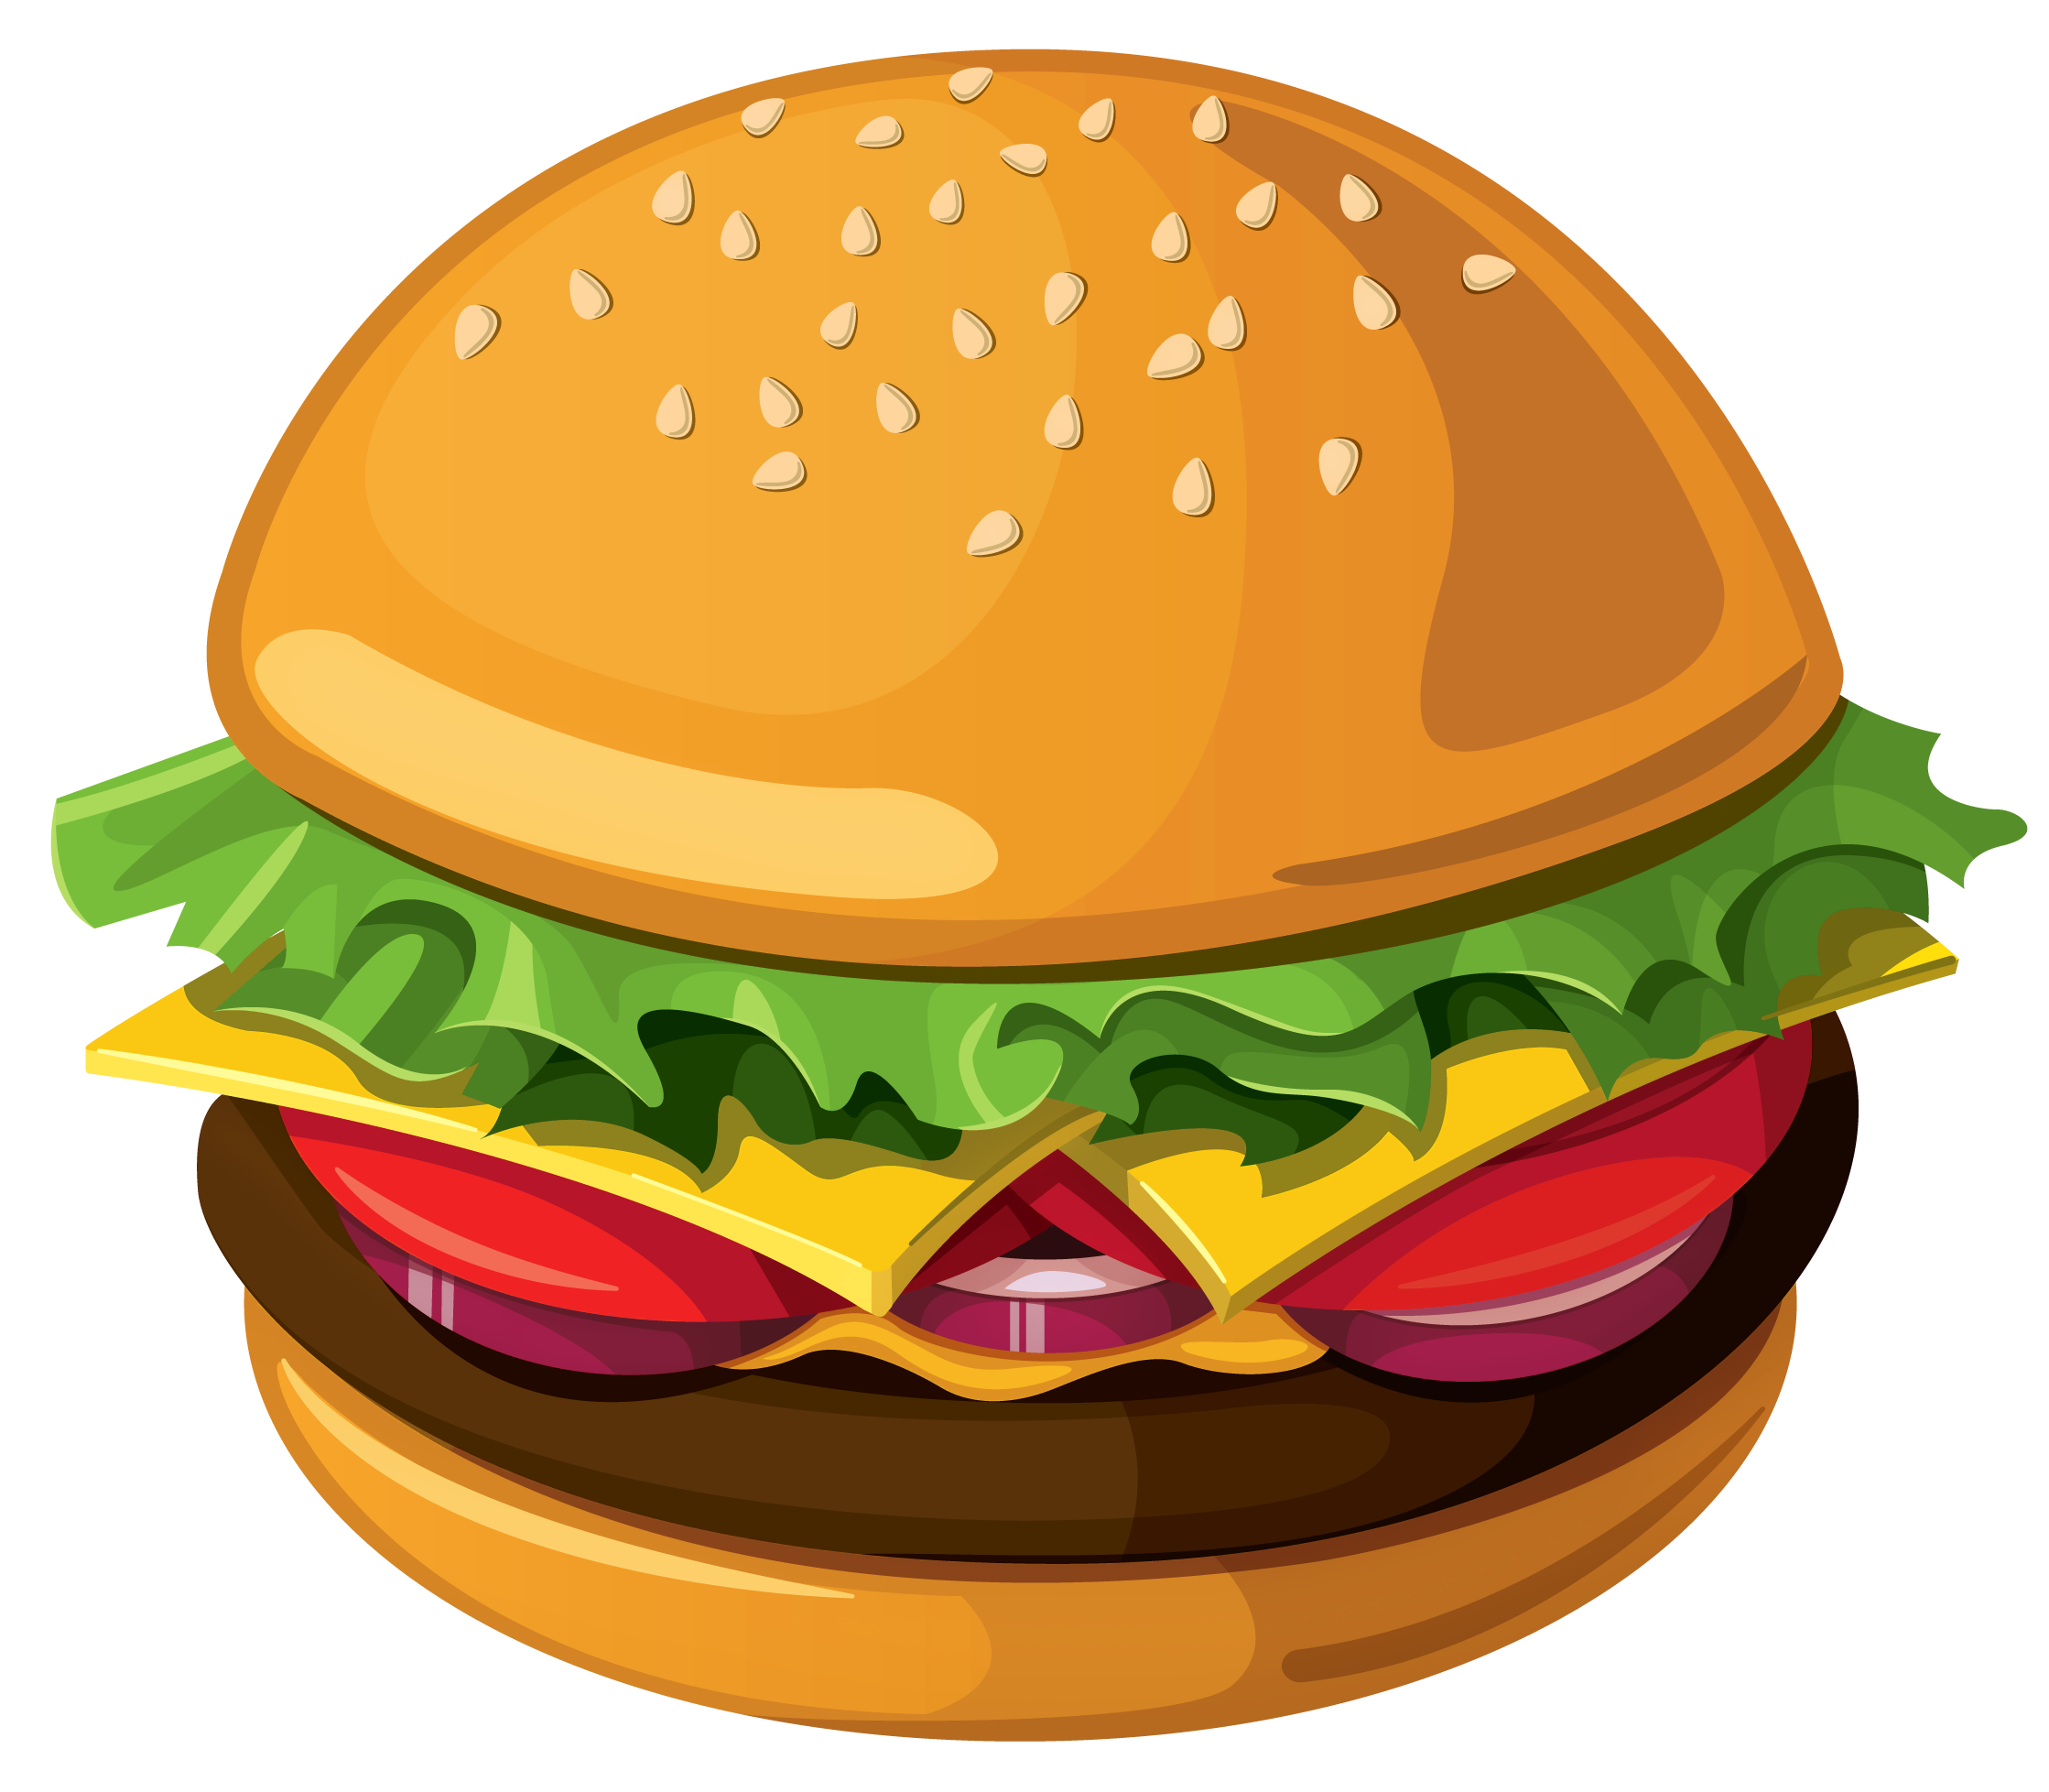 Hamburger fast food.